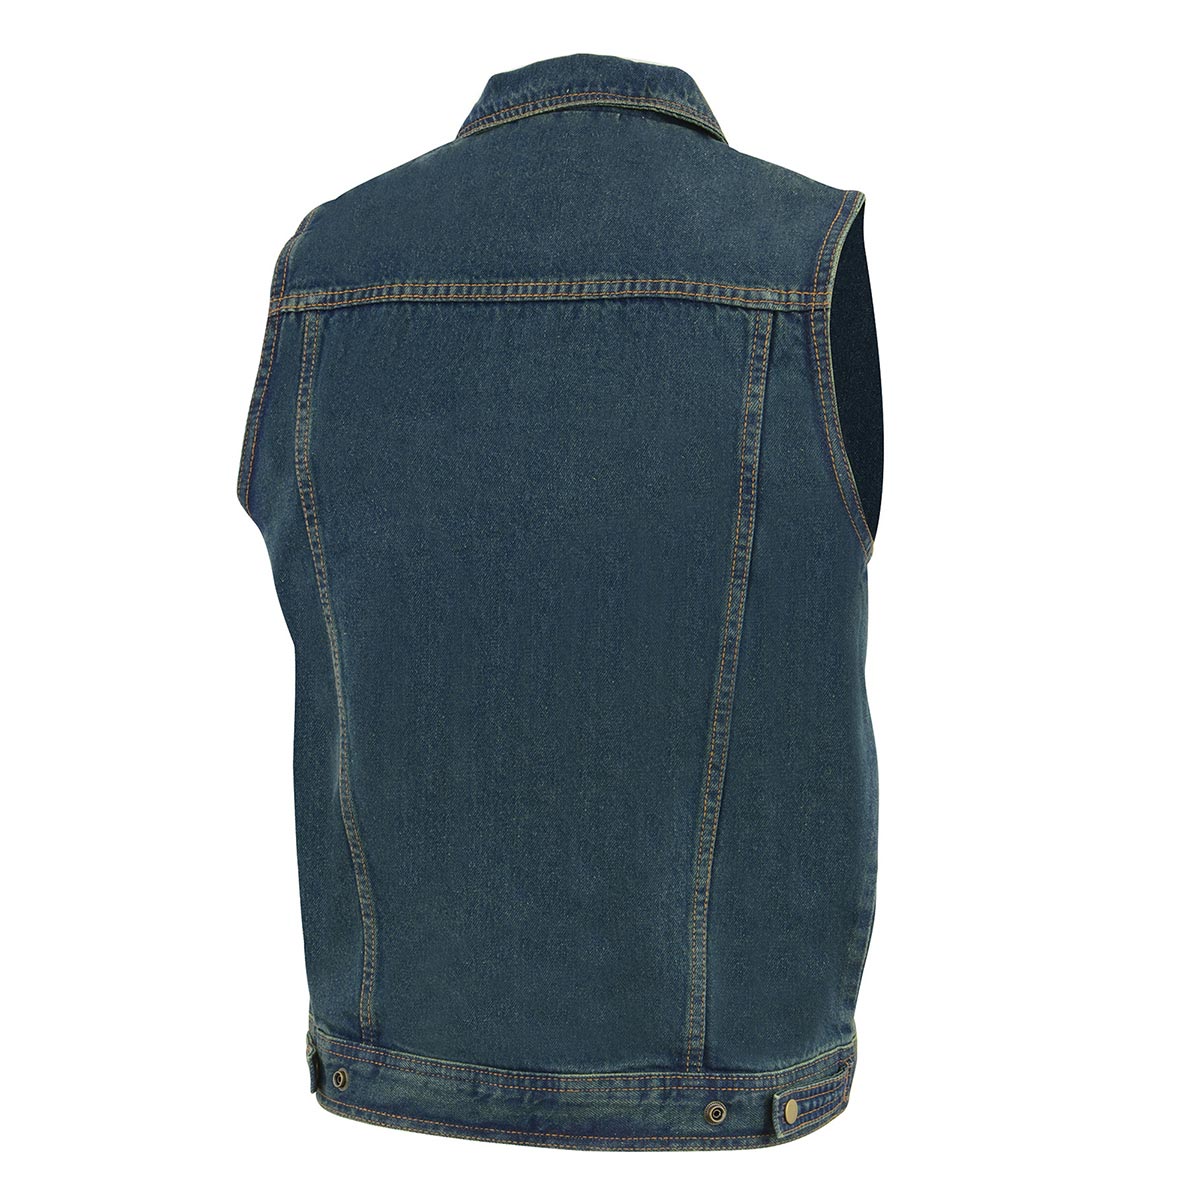 Men's Blue Snap Front Denim Vest with Shirt Collar